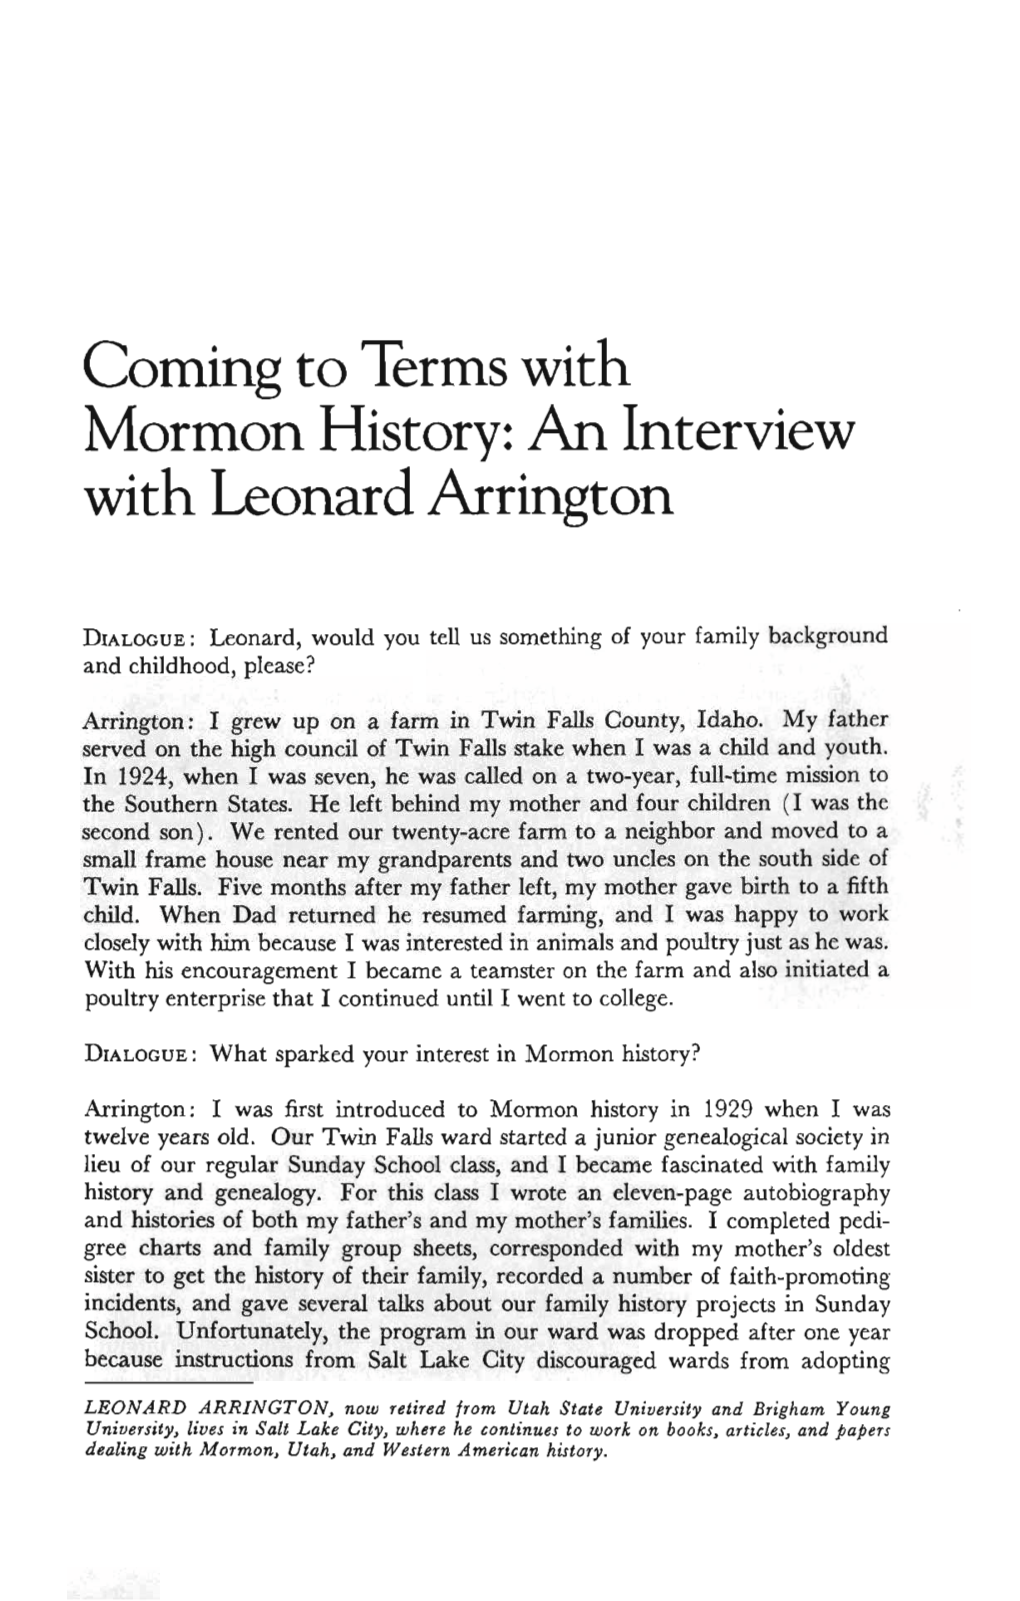 An Interview with Leonard Arrington